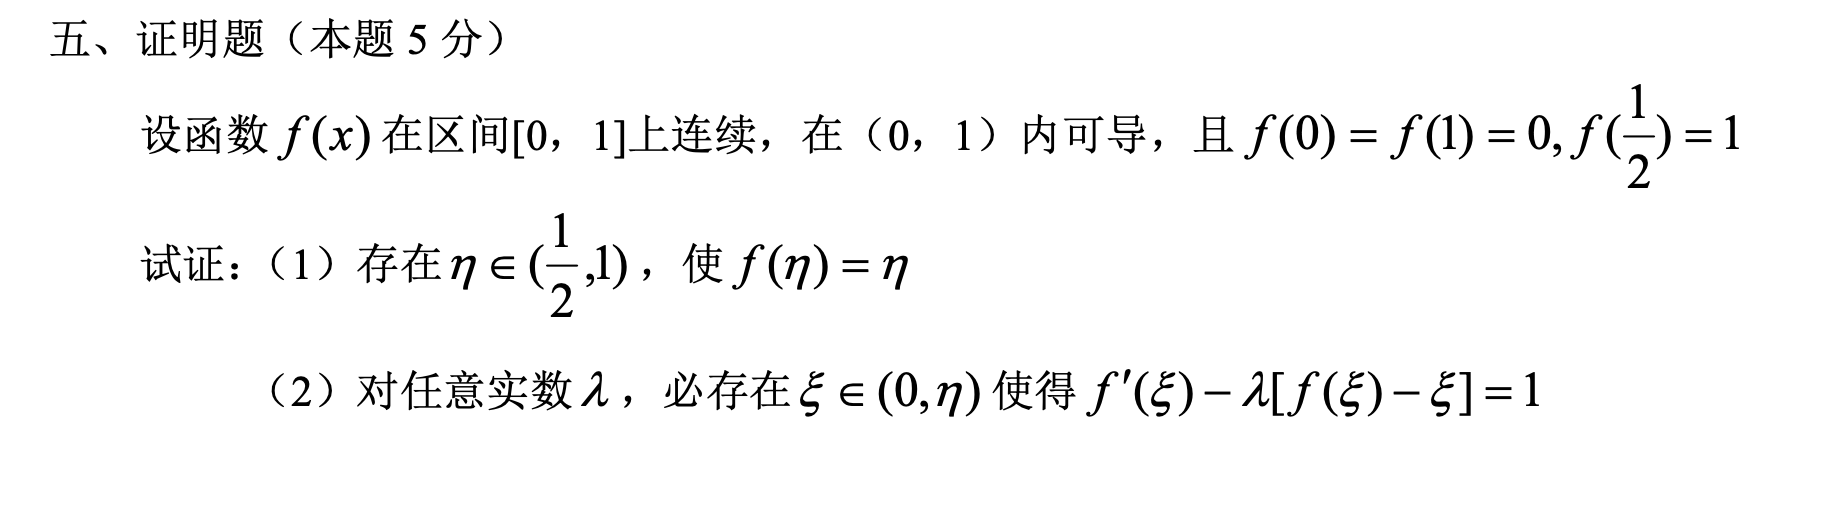 Solved 五、证明题(题5分) 设函数f(x)在区间1 连续,在(0,1)内可导,且(0